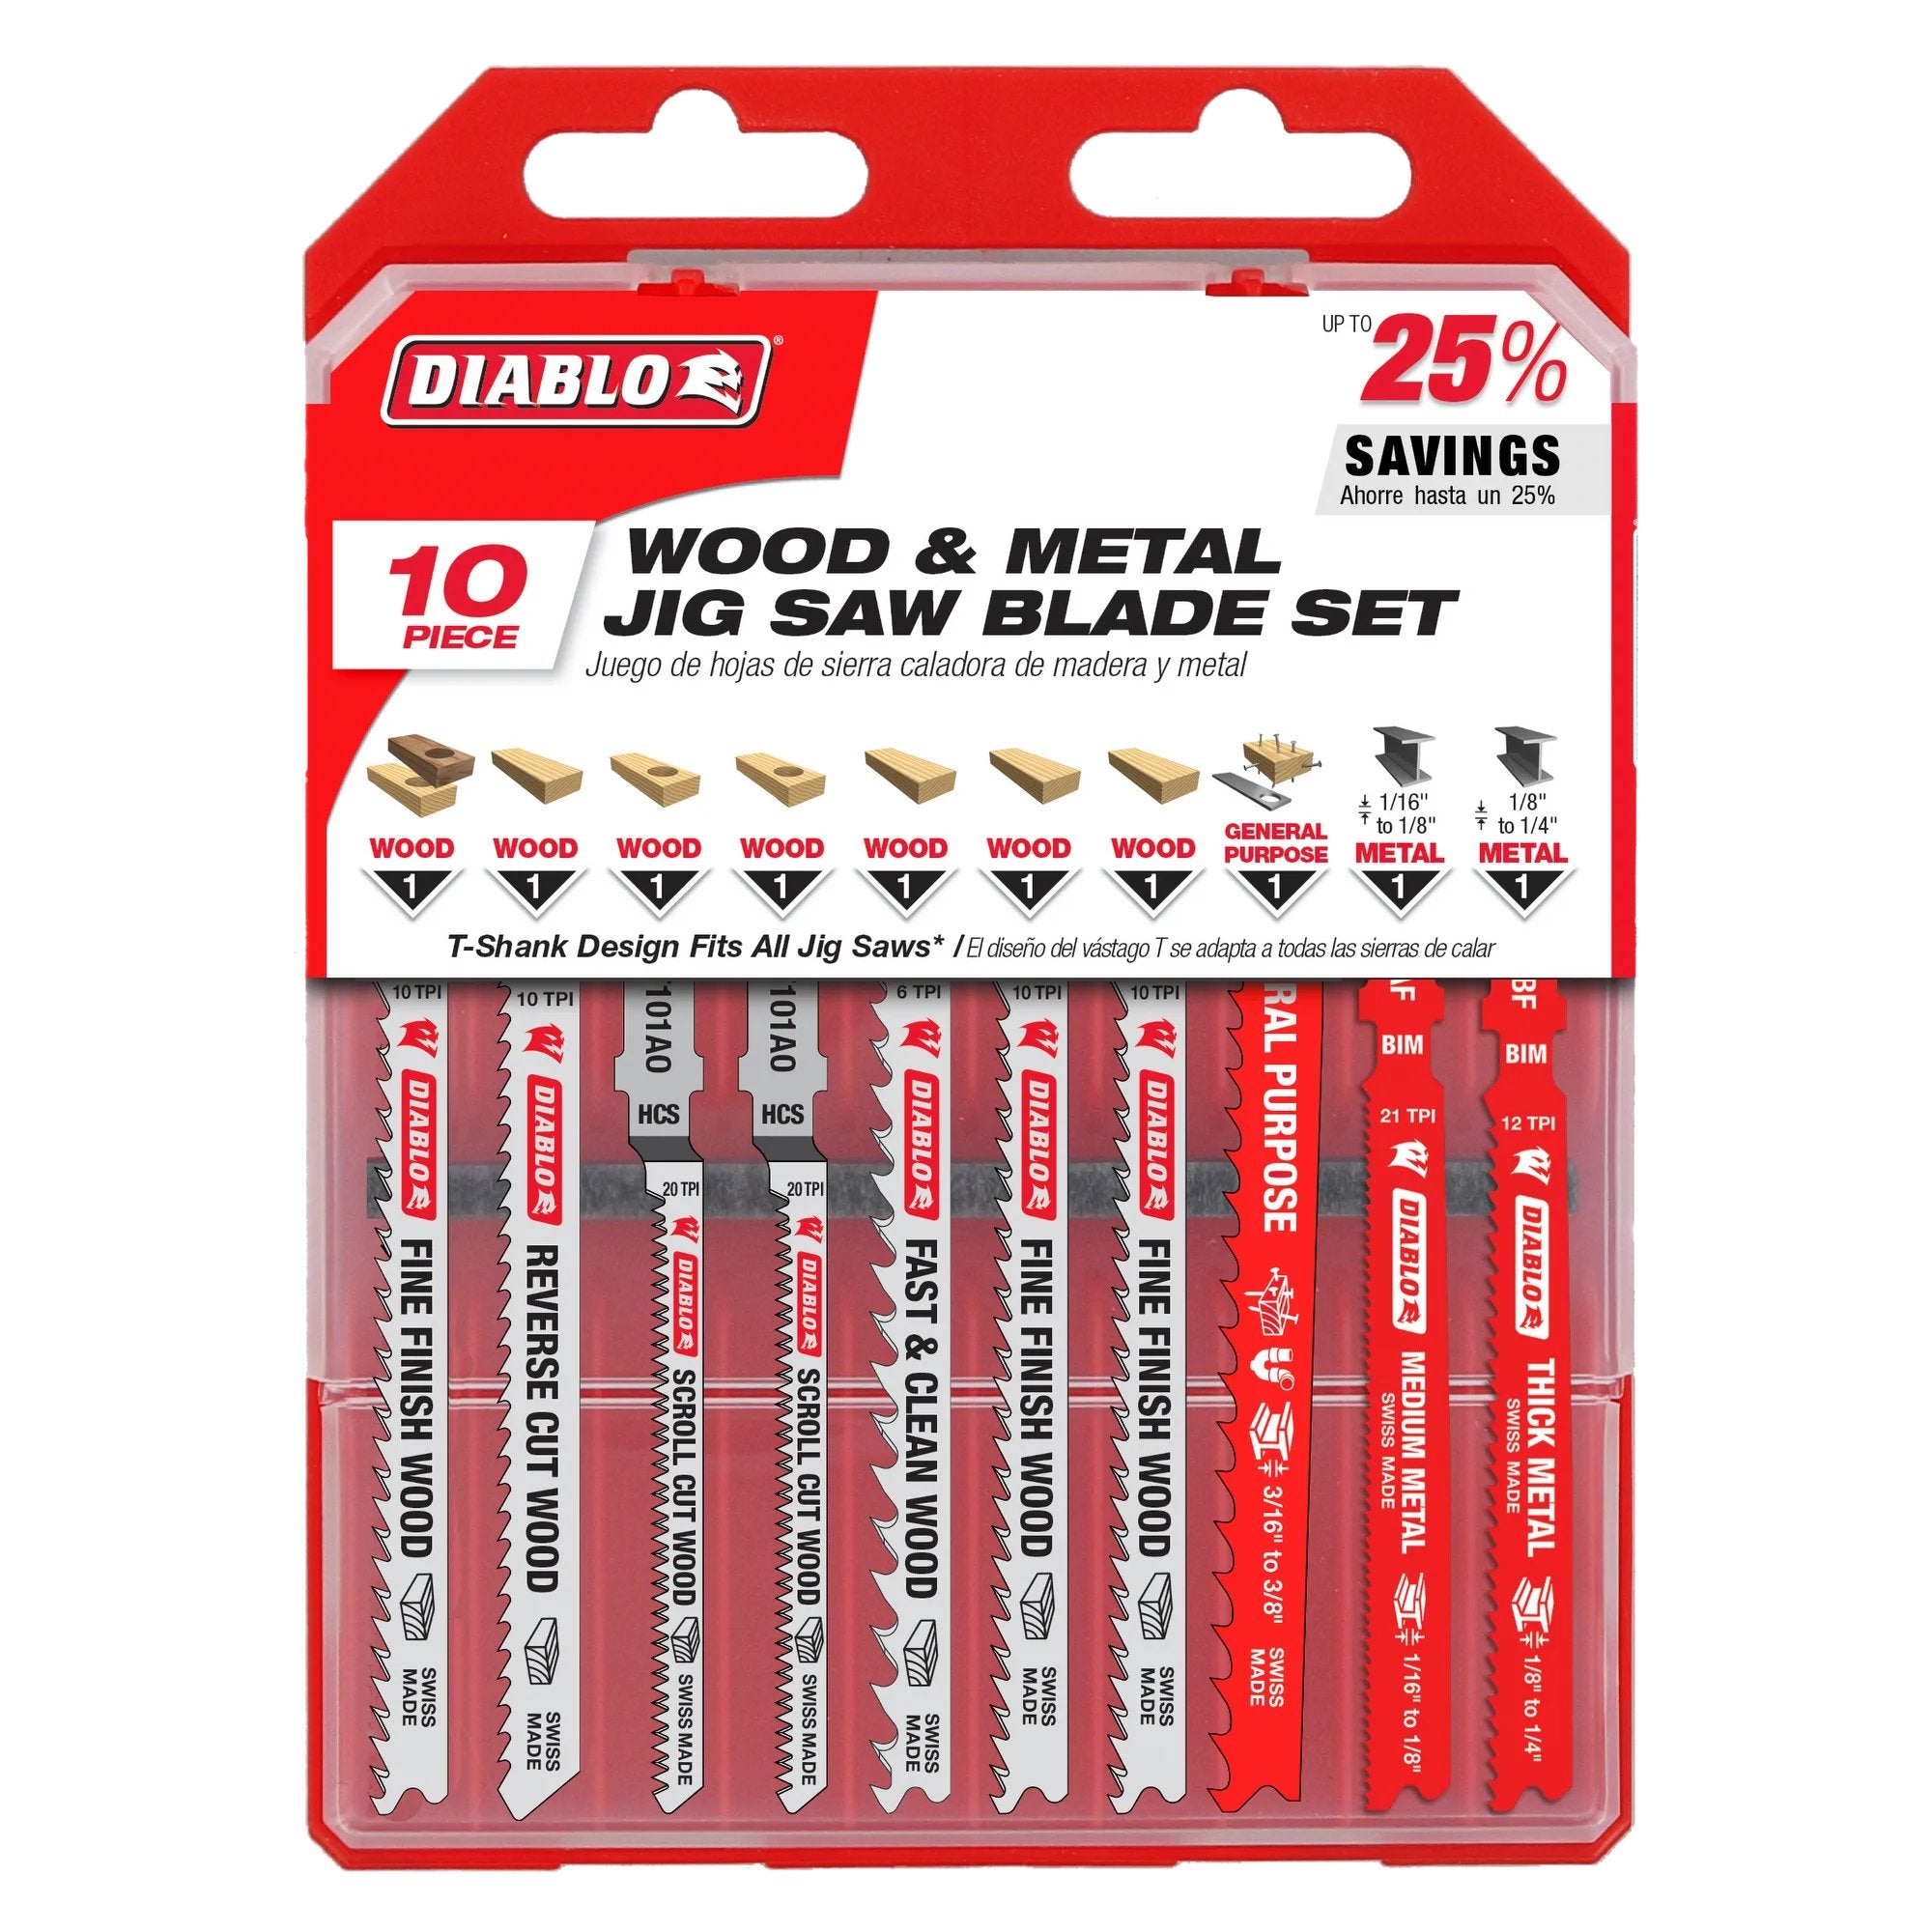 Diablo DJT10S - 10 pc T-Shank Jig Saw Blade Set for Wood & Metal- 10 Pack